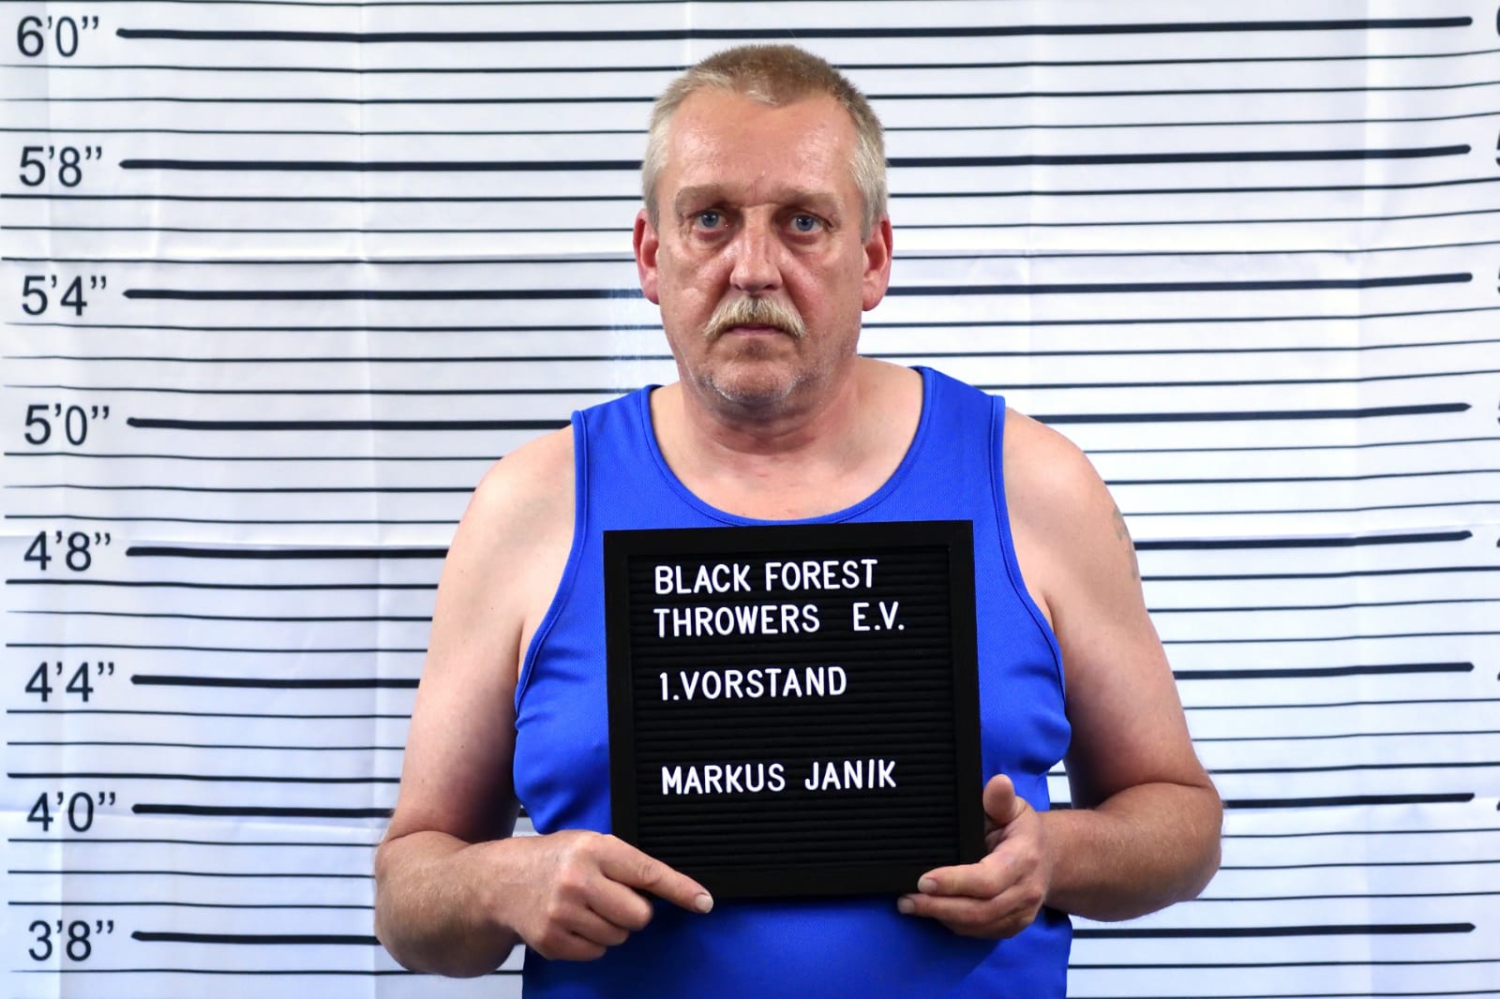 Markus Janik